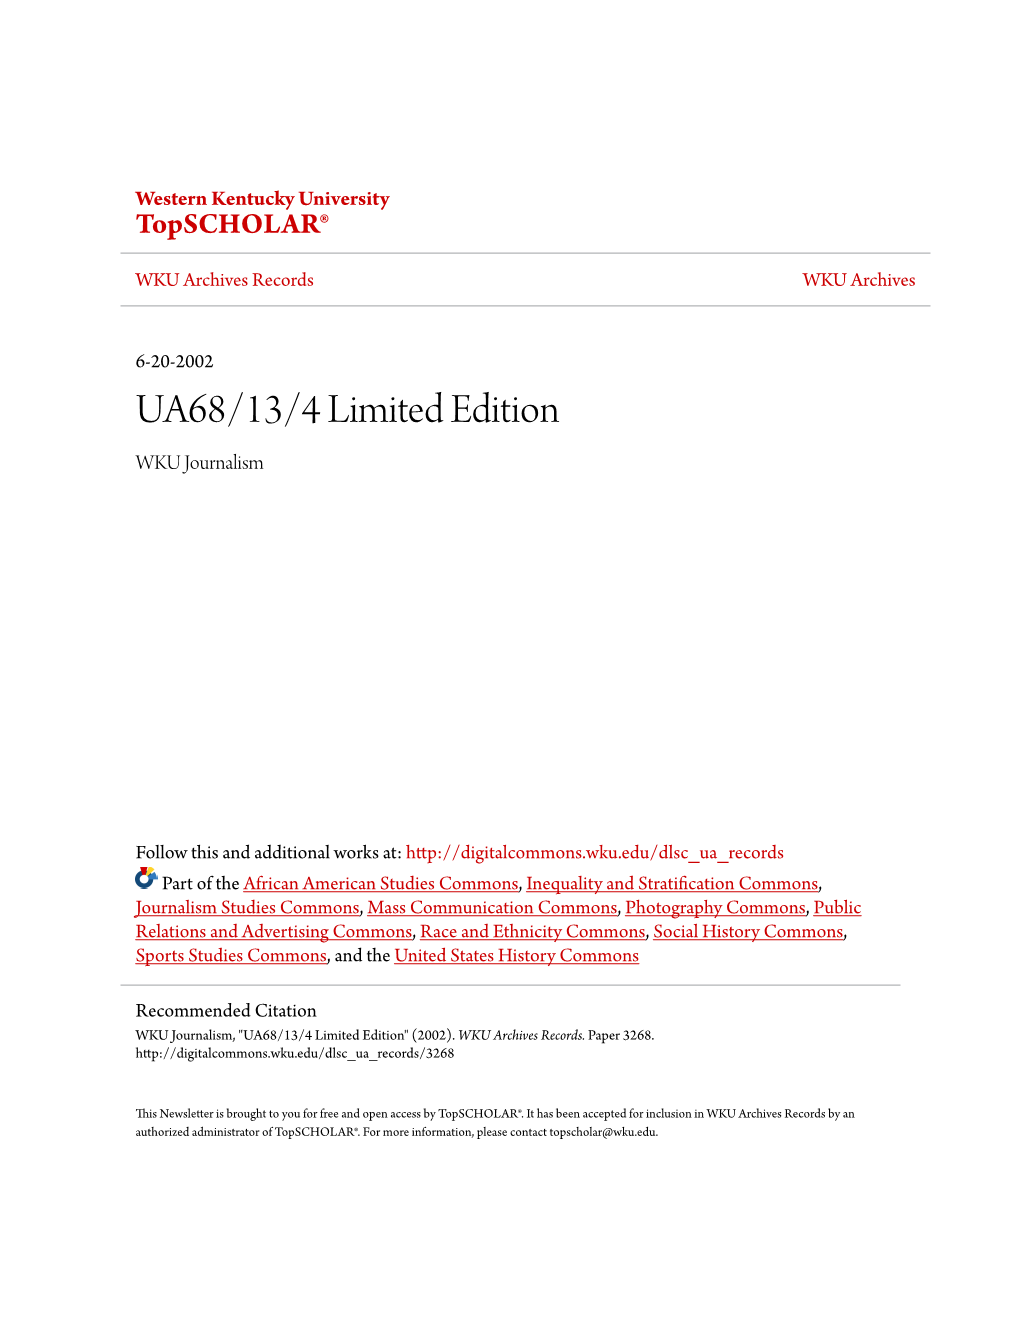 UA68/13/4 Limited Edition WKU Journalism